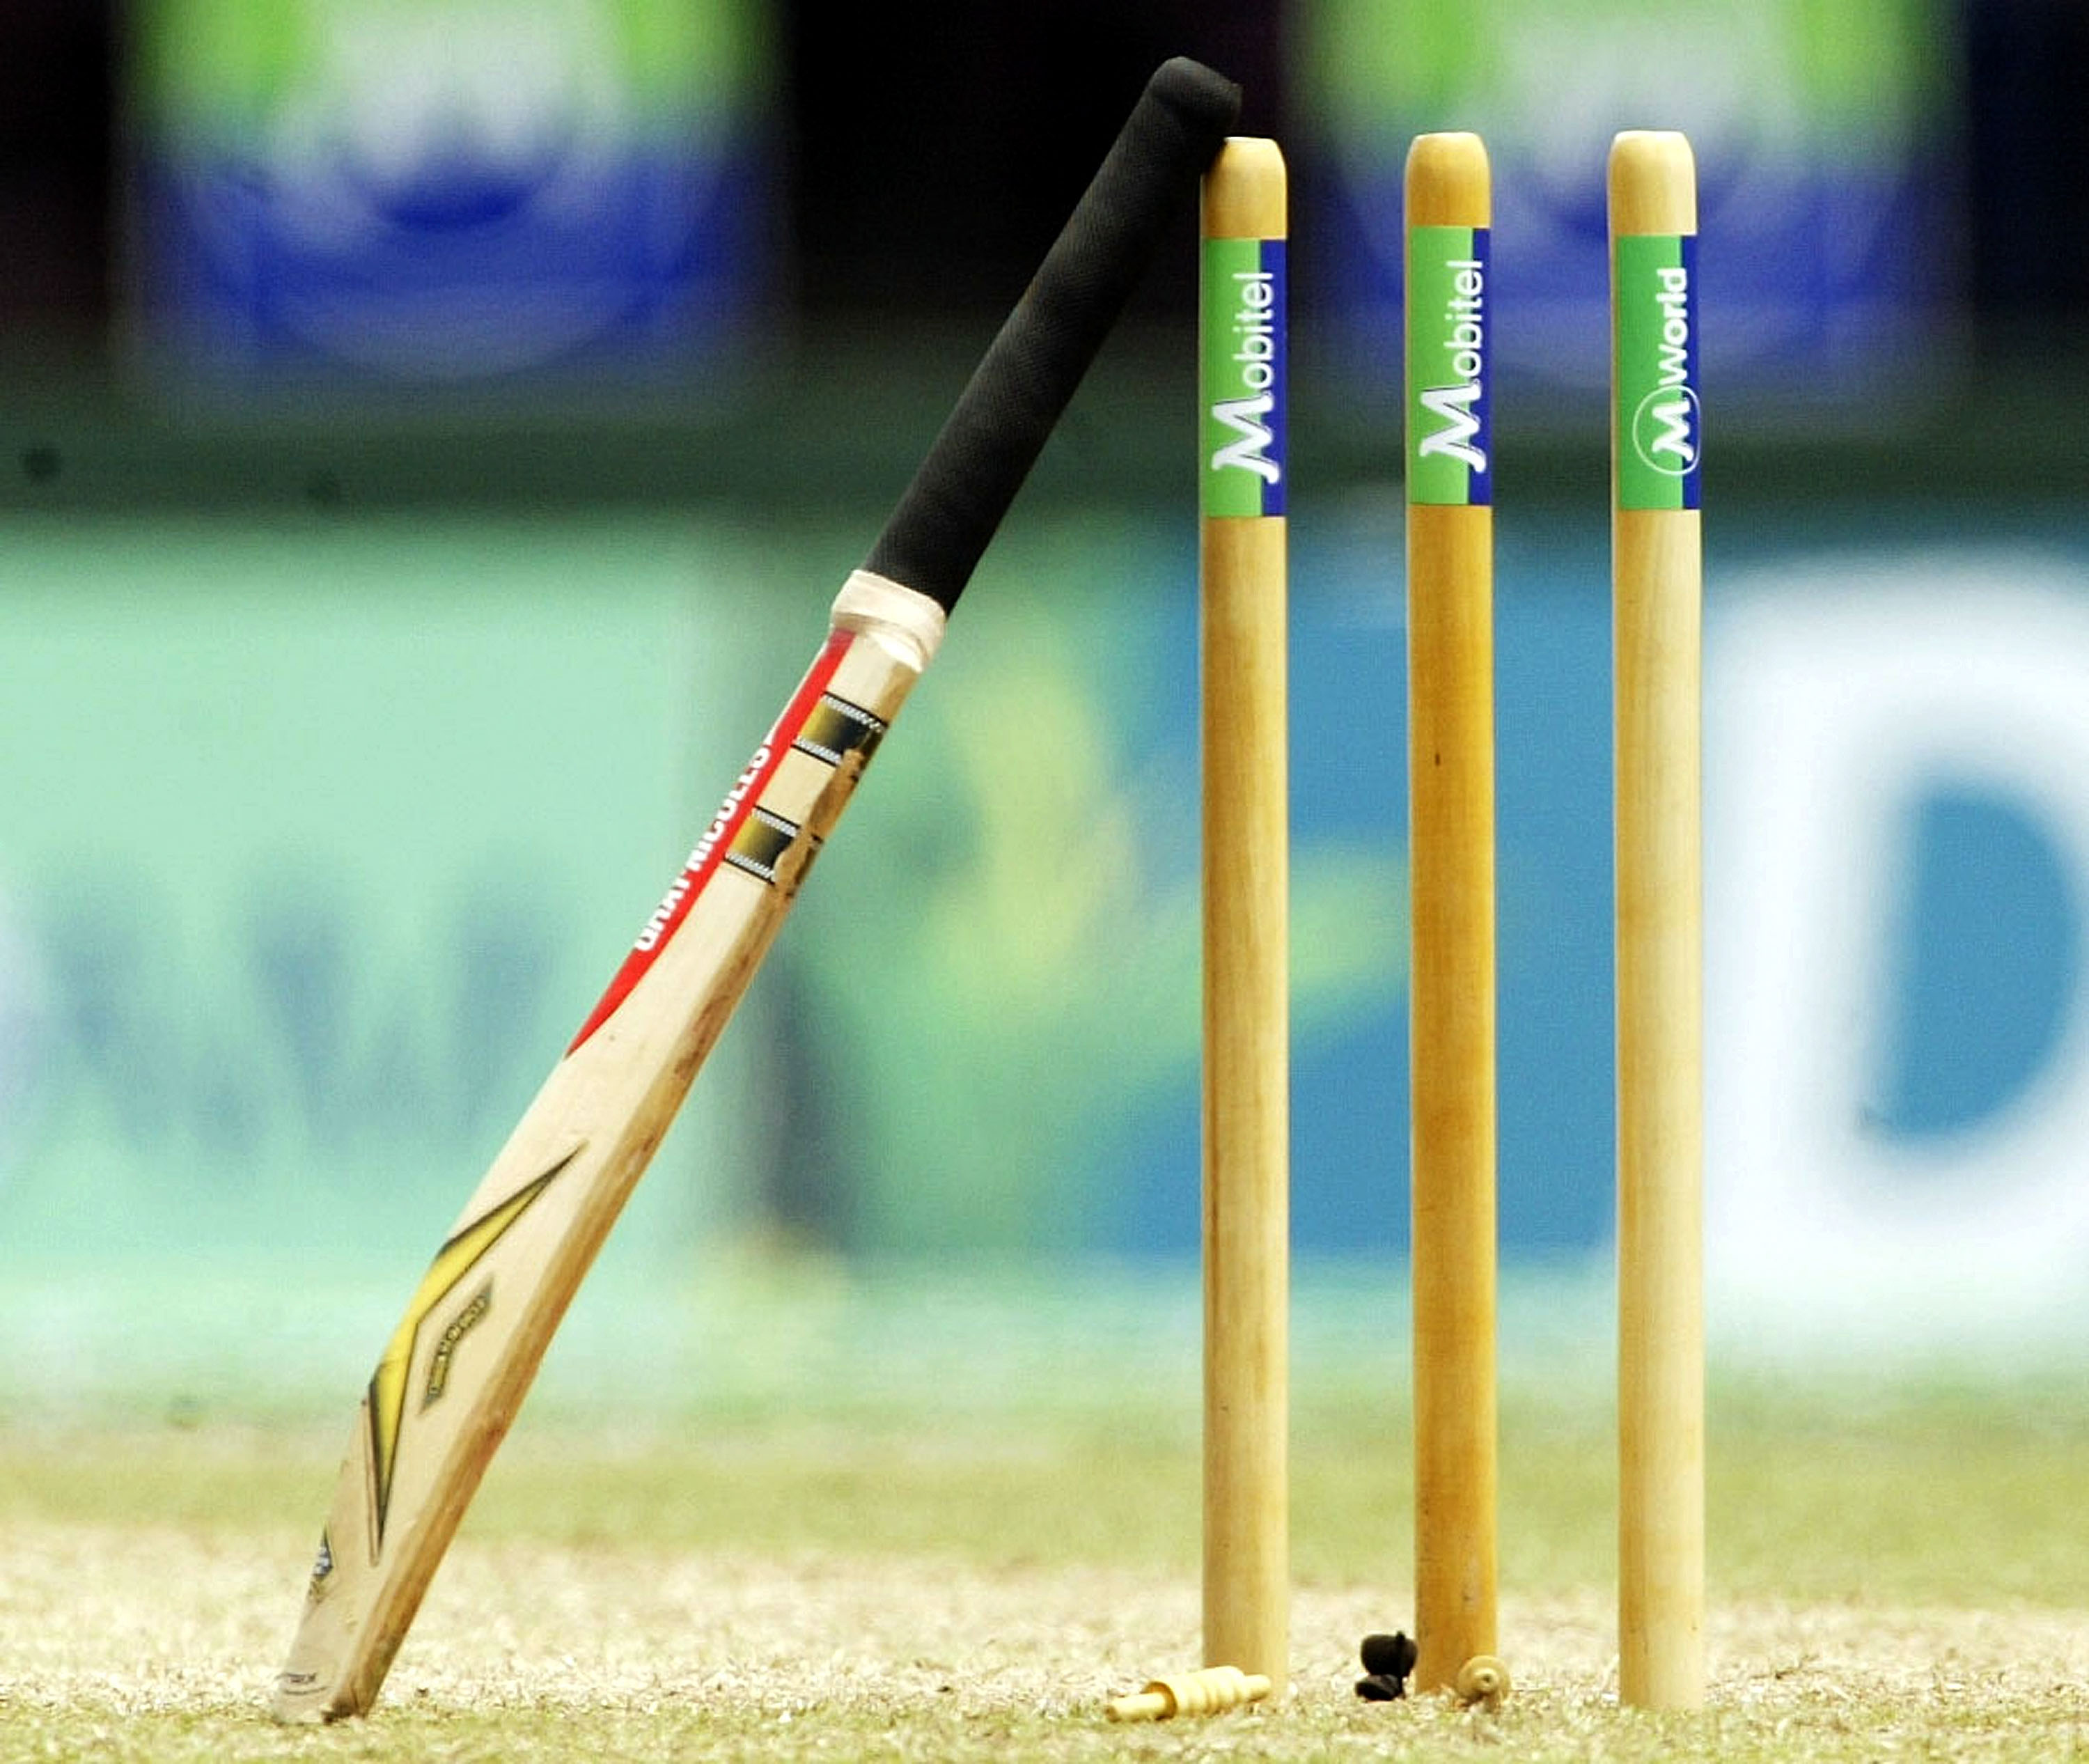 KSCA bars Sudhindra Shinde from all cricketing activities